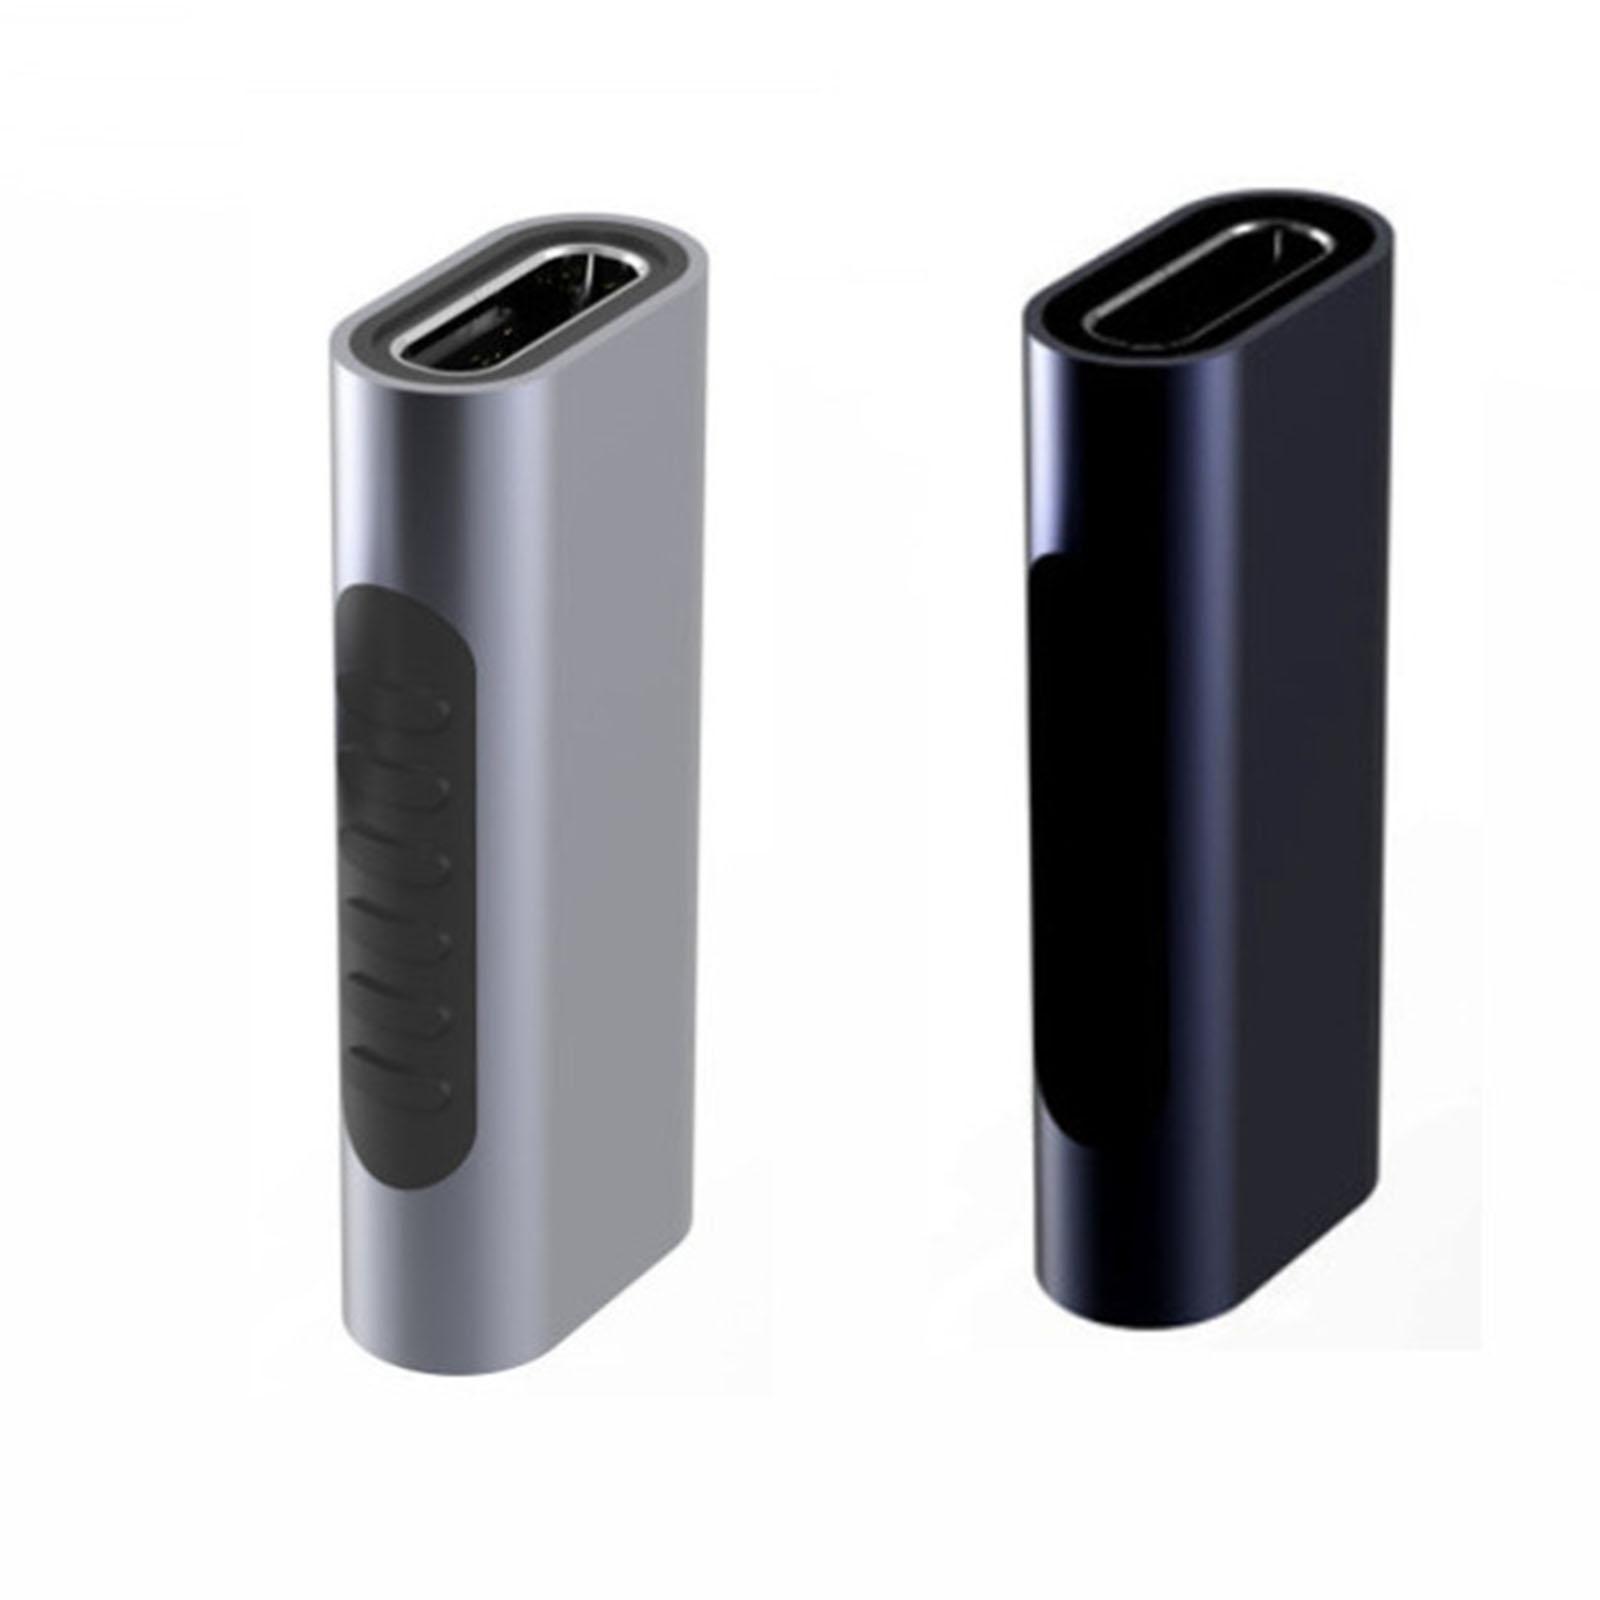 Mini USB Type .1 Female to USB C Female Adapter Converter for Tablet